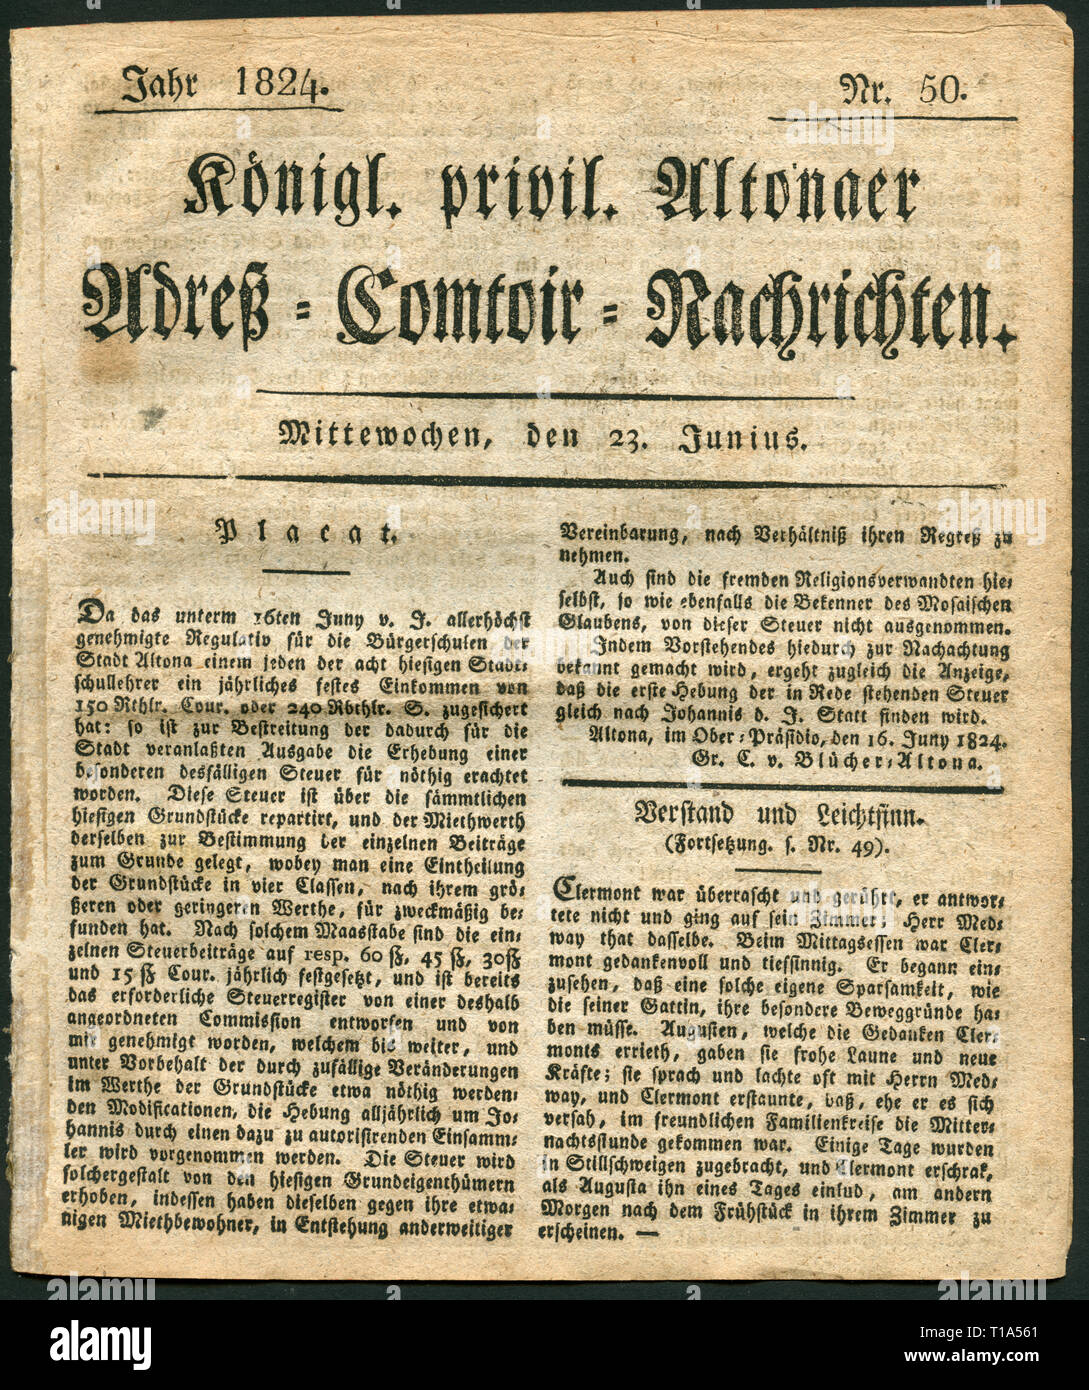 Germany, duchy Holstein, Hamburg, Altona, historical newspaper: 'Königl. privil. Altonaer-Comtoir-Nachrichten', No. 50, published 23.6.1824, Additional-Rights-Clearance-Info-Not-Available Stock Photo